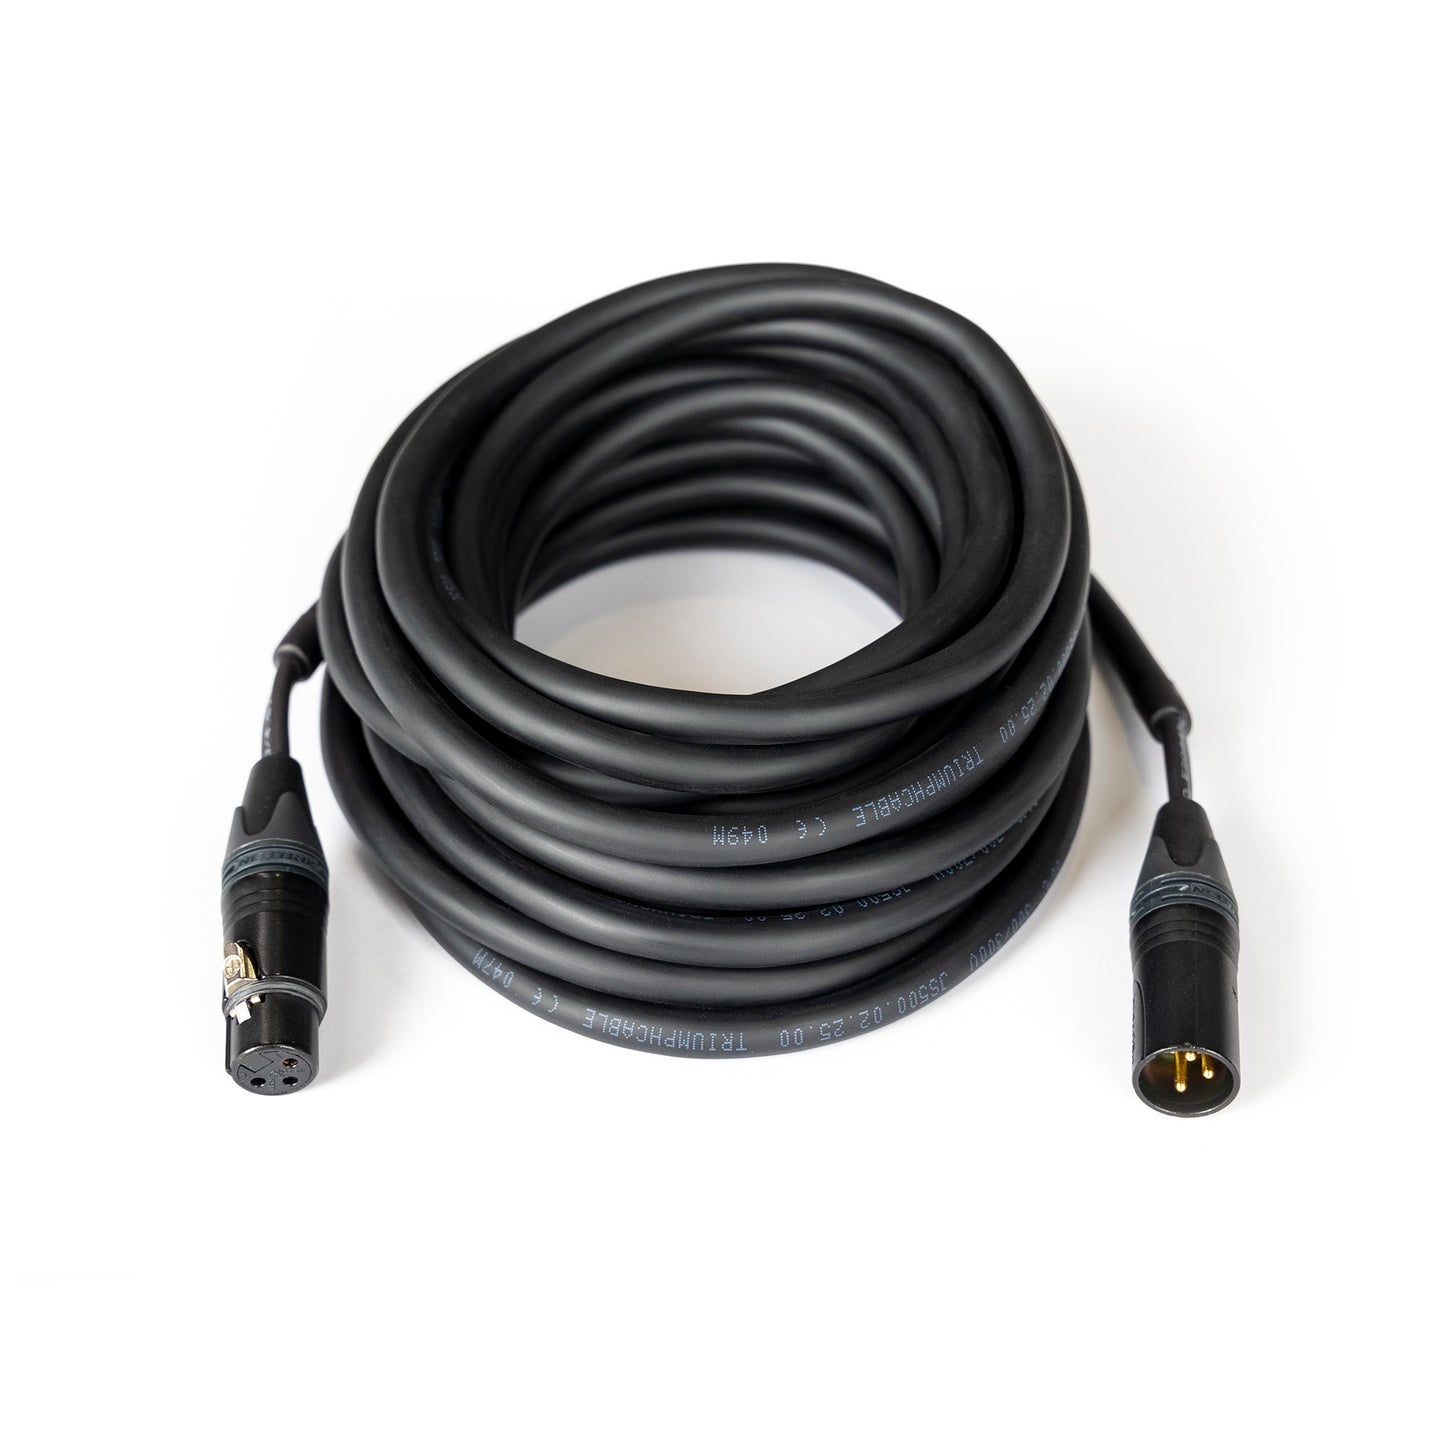 Revolt High Capacity 3-pin XLR Power Cable